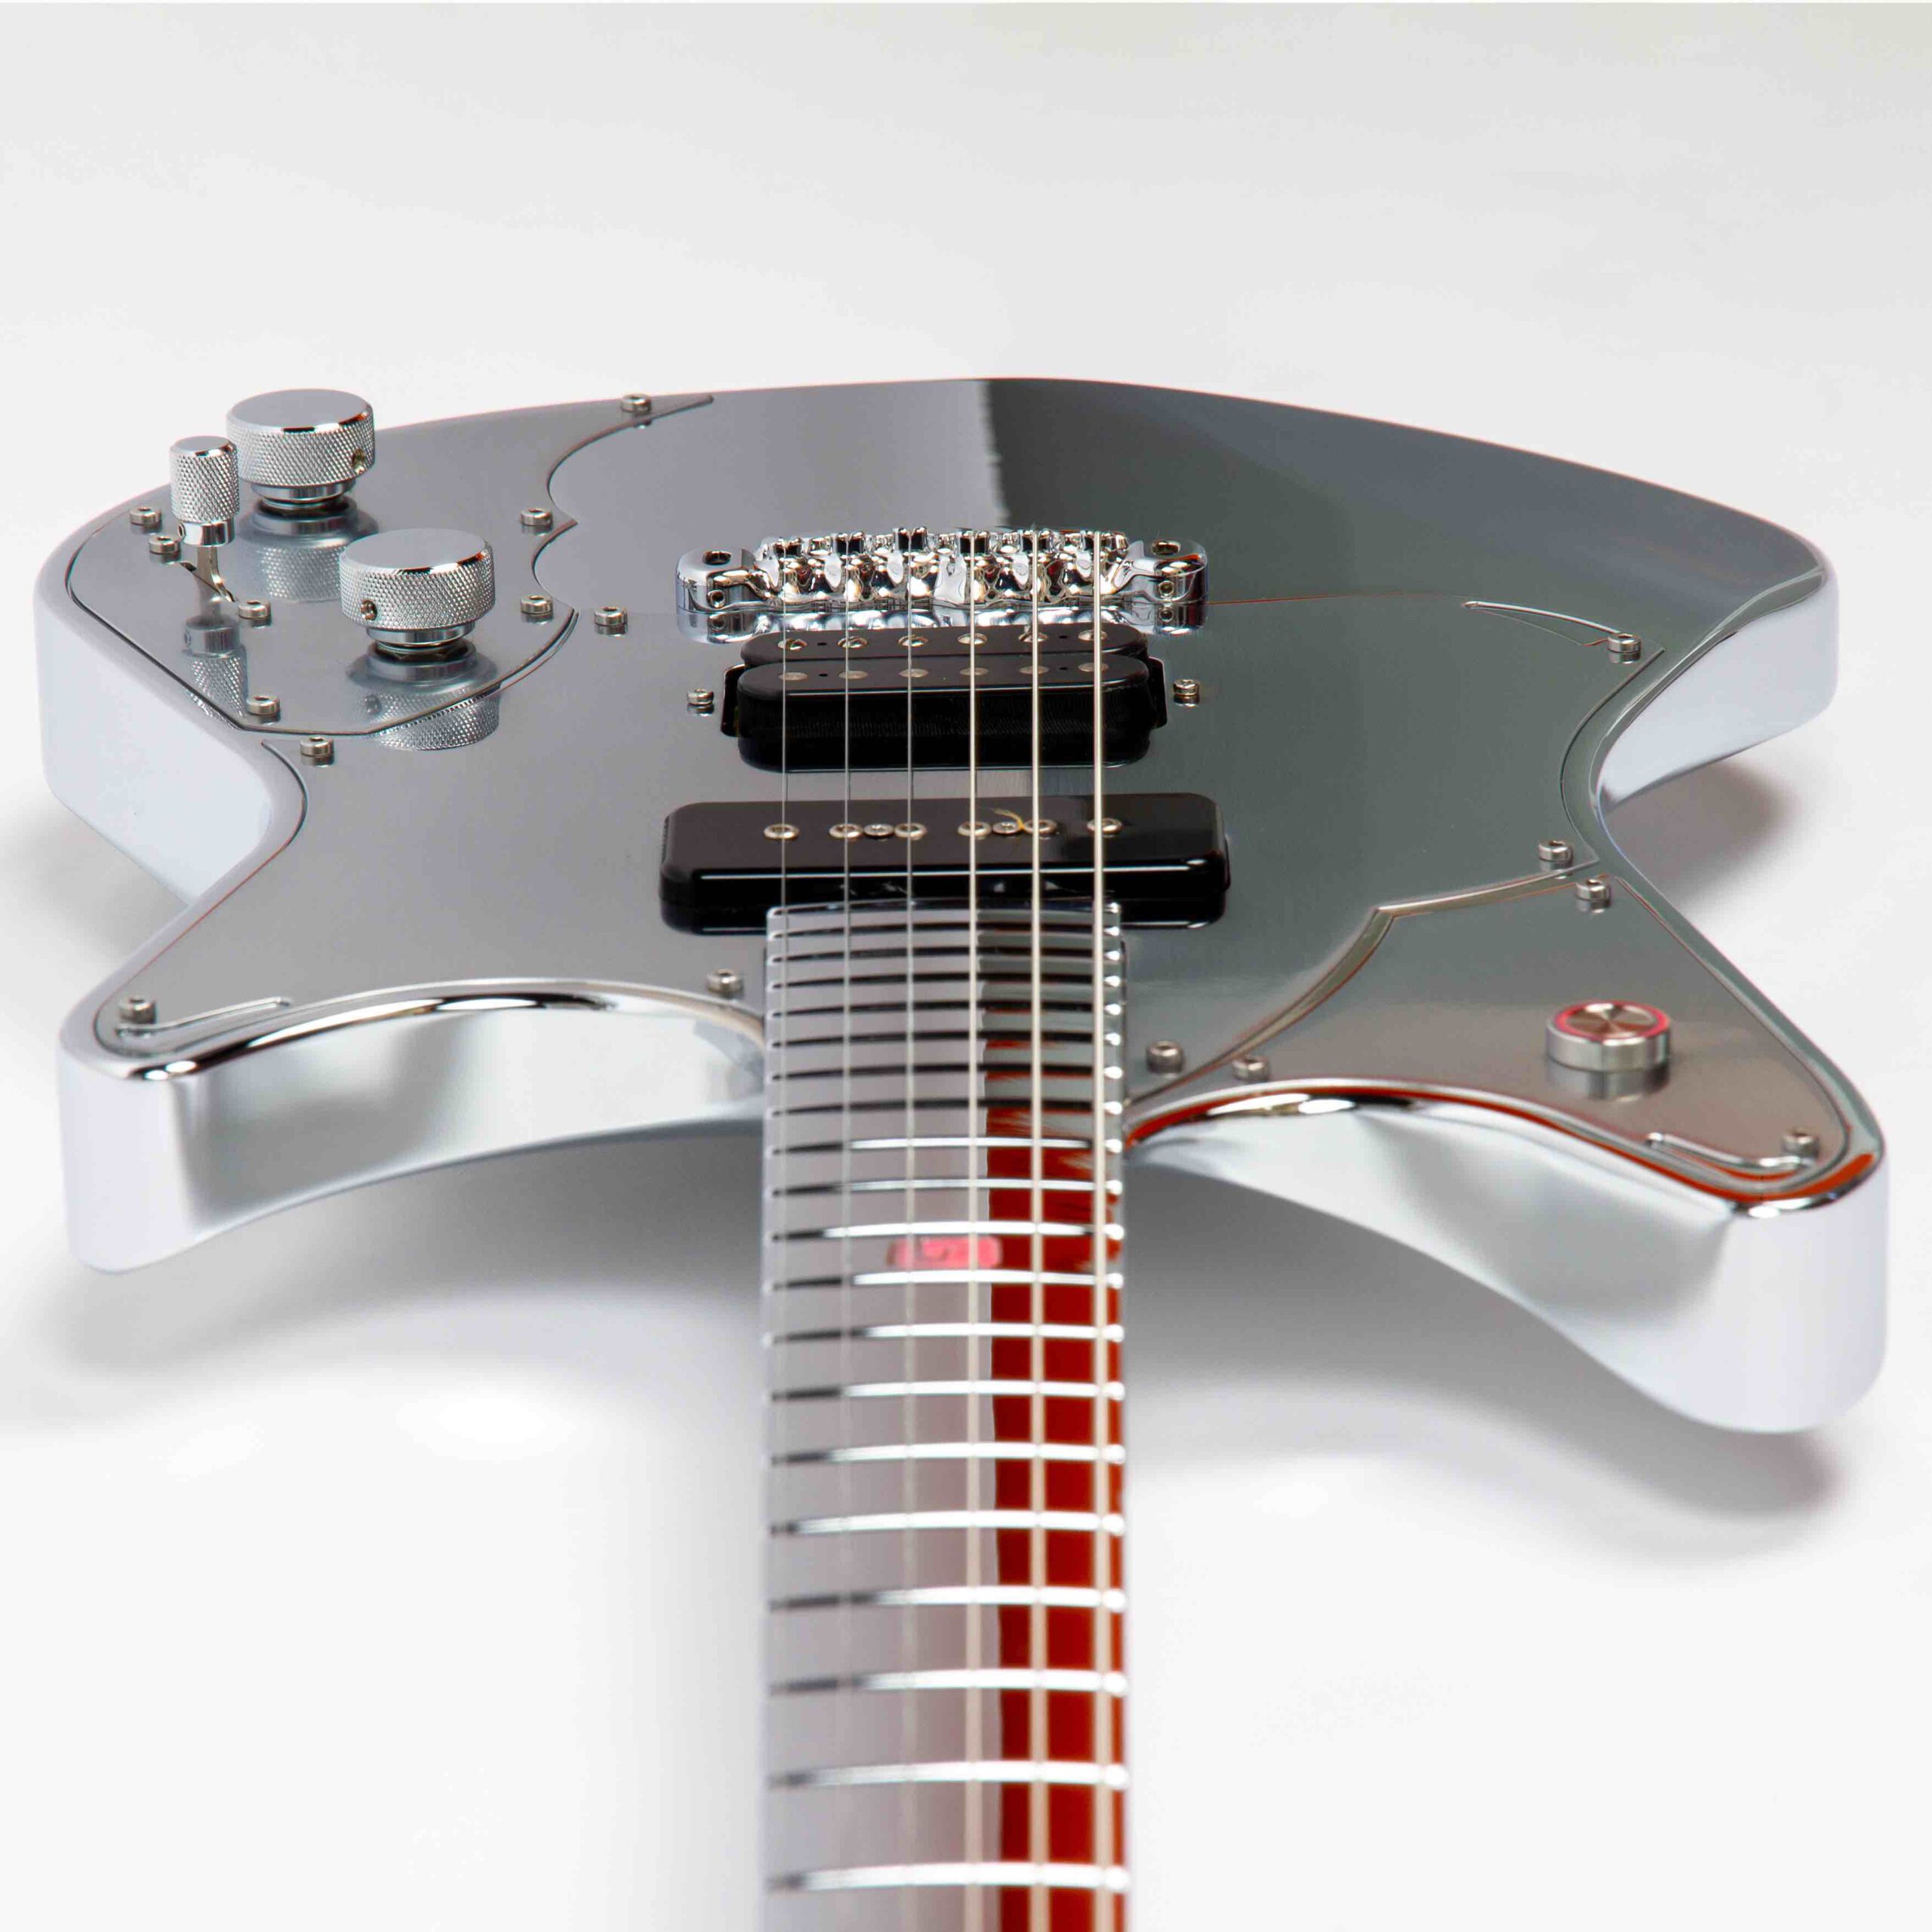 Aluminum guitar body